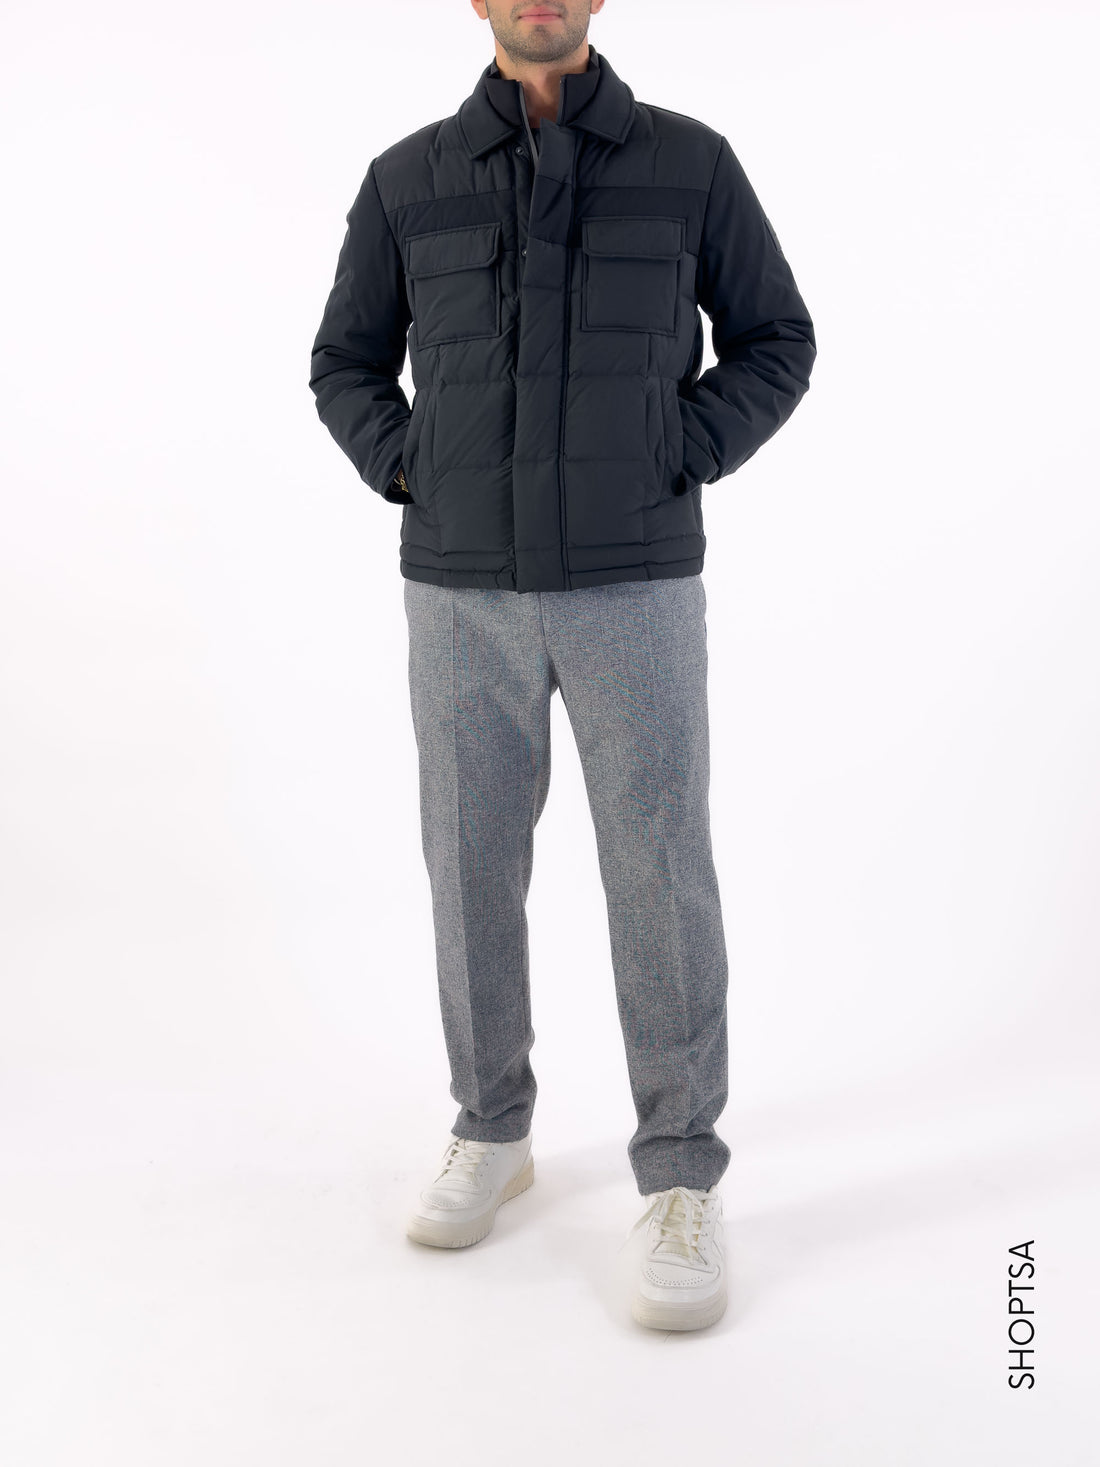 Calvin klein Menswear jacket - 110327